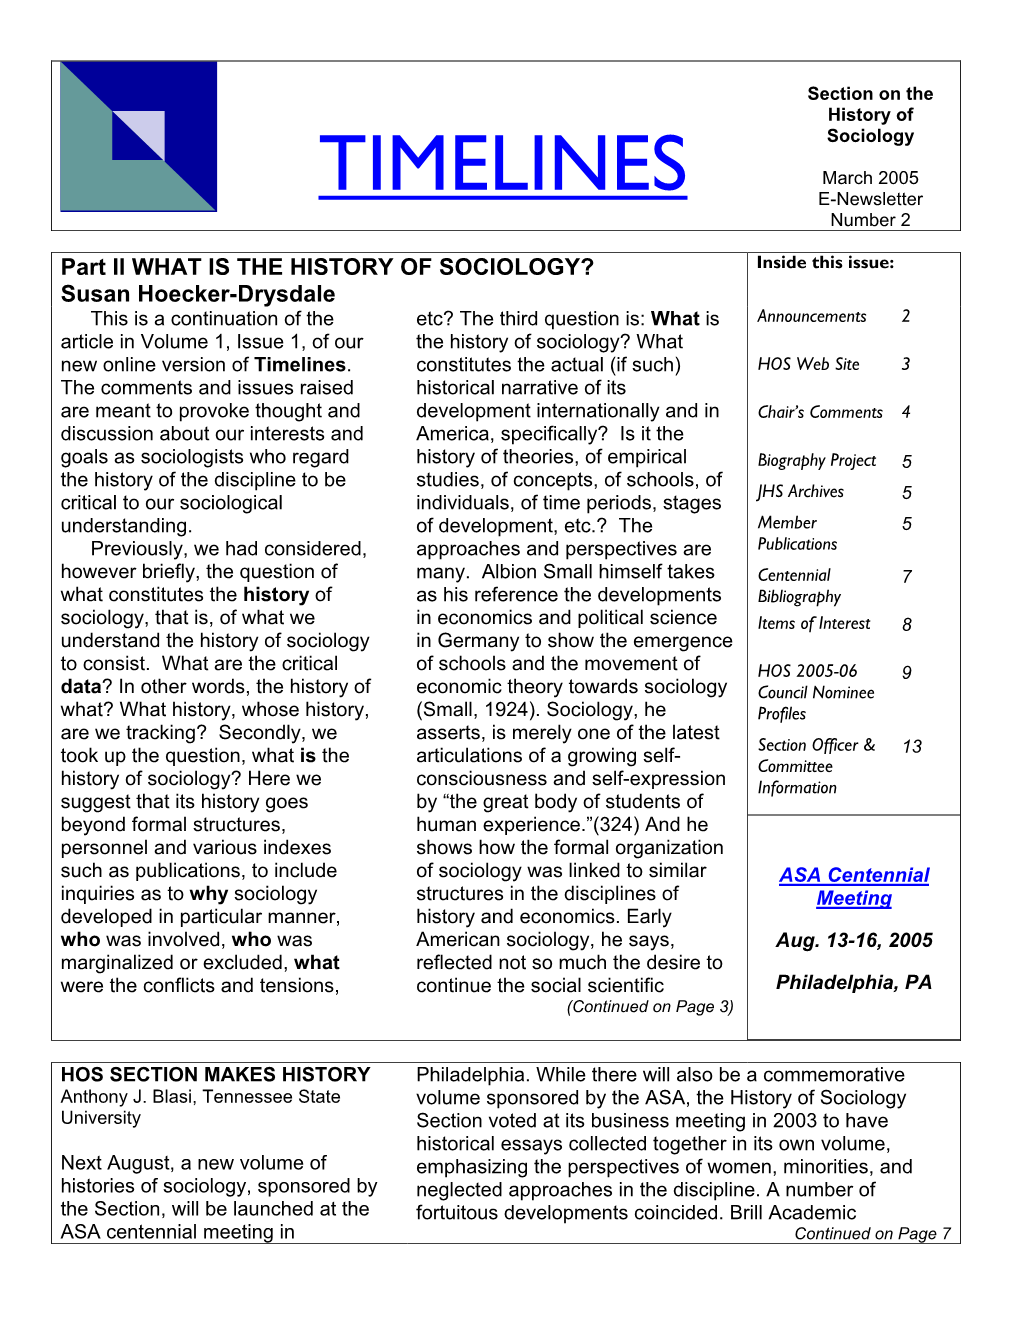 TIMELINES March 2005 E-Newsletter Number 2